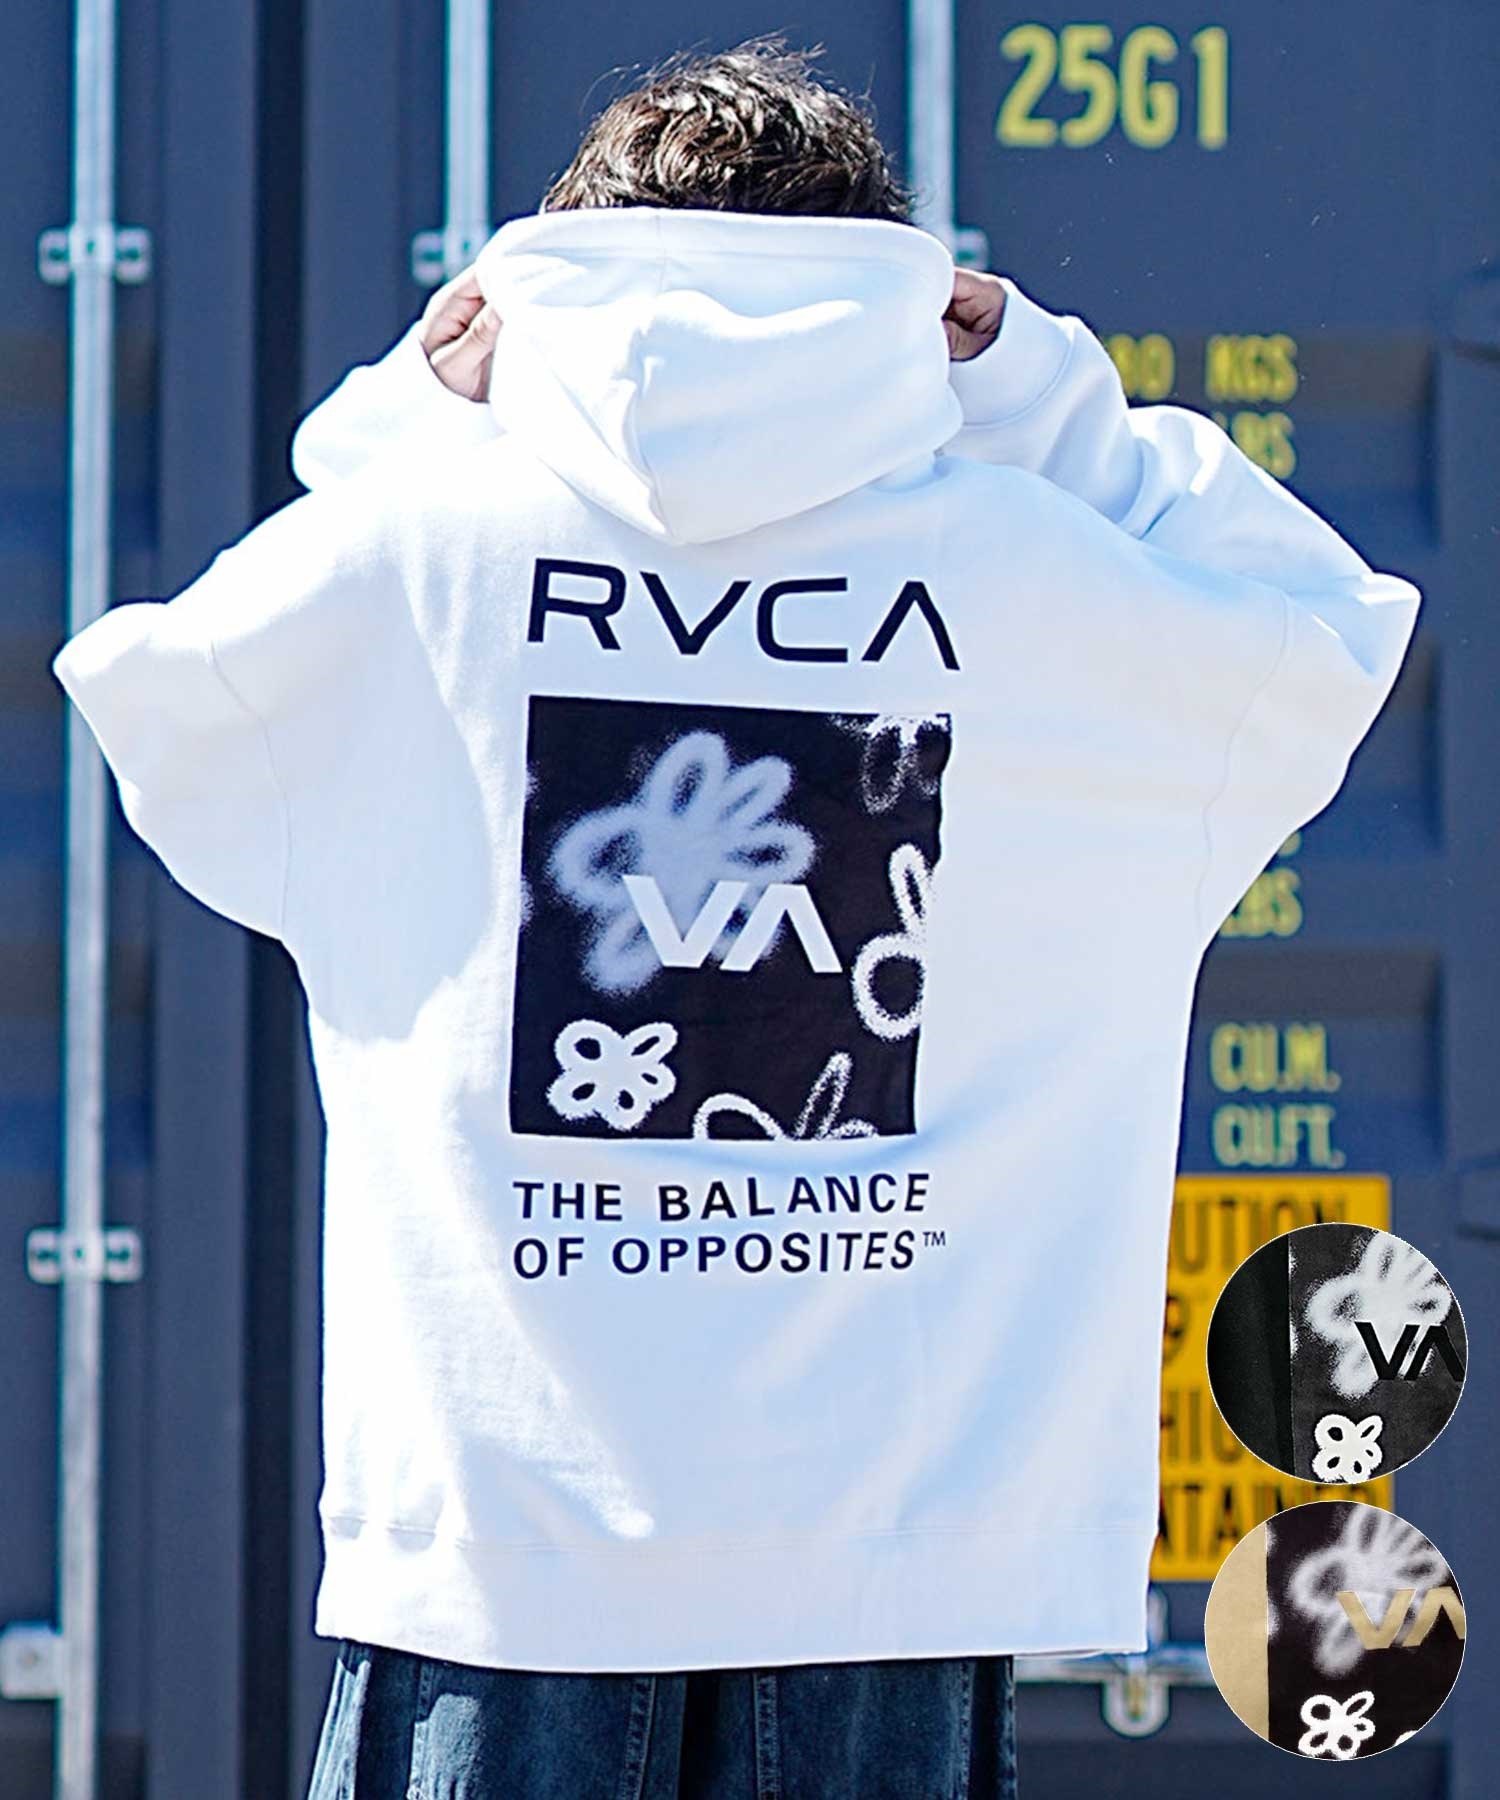 RVCA/ルーカ メンズ スクエア ロゴ オーバーサイズ クルーネック パーカー BD042-162(WHT-S)